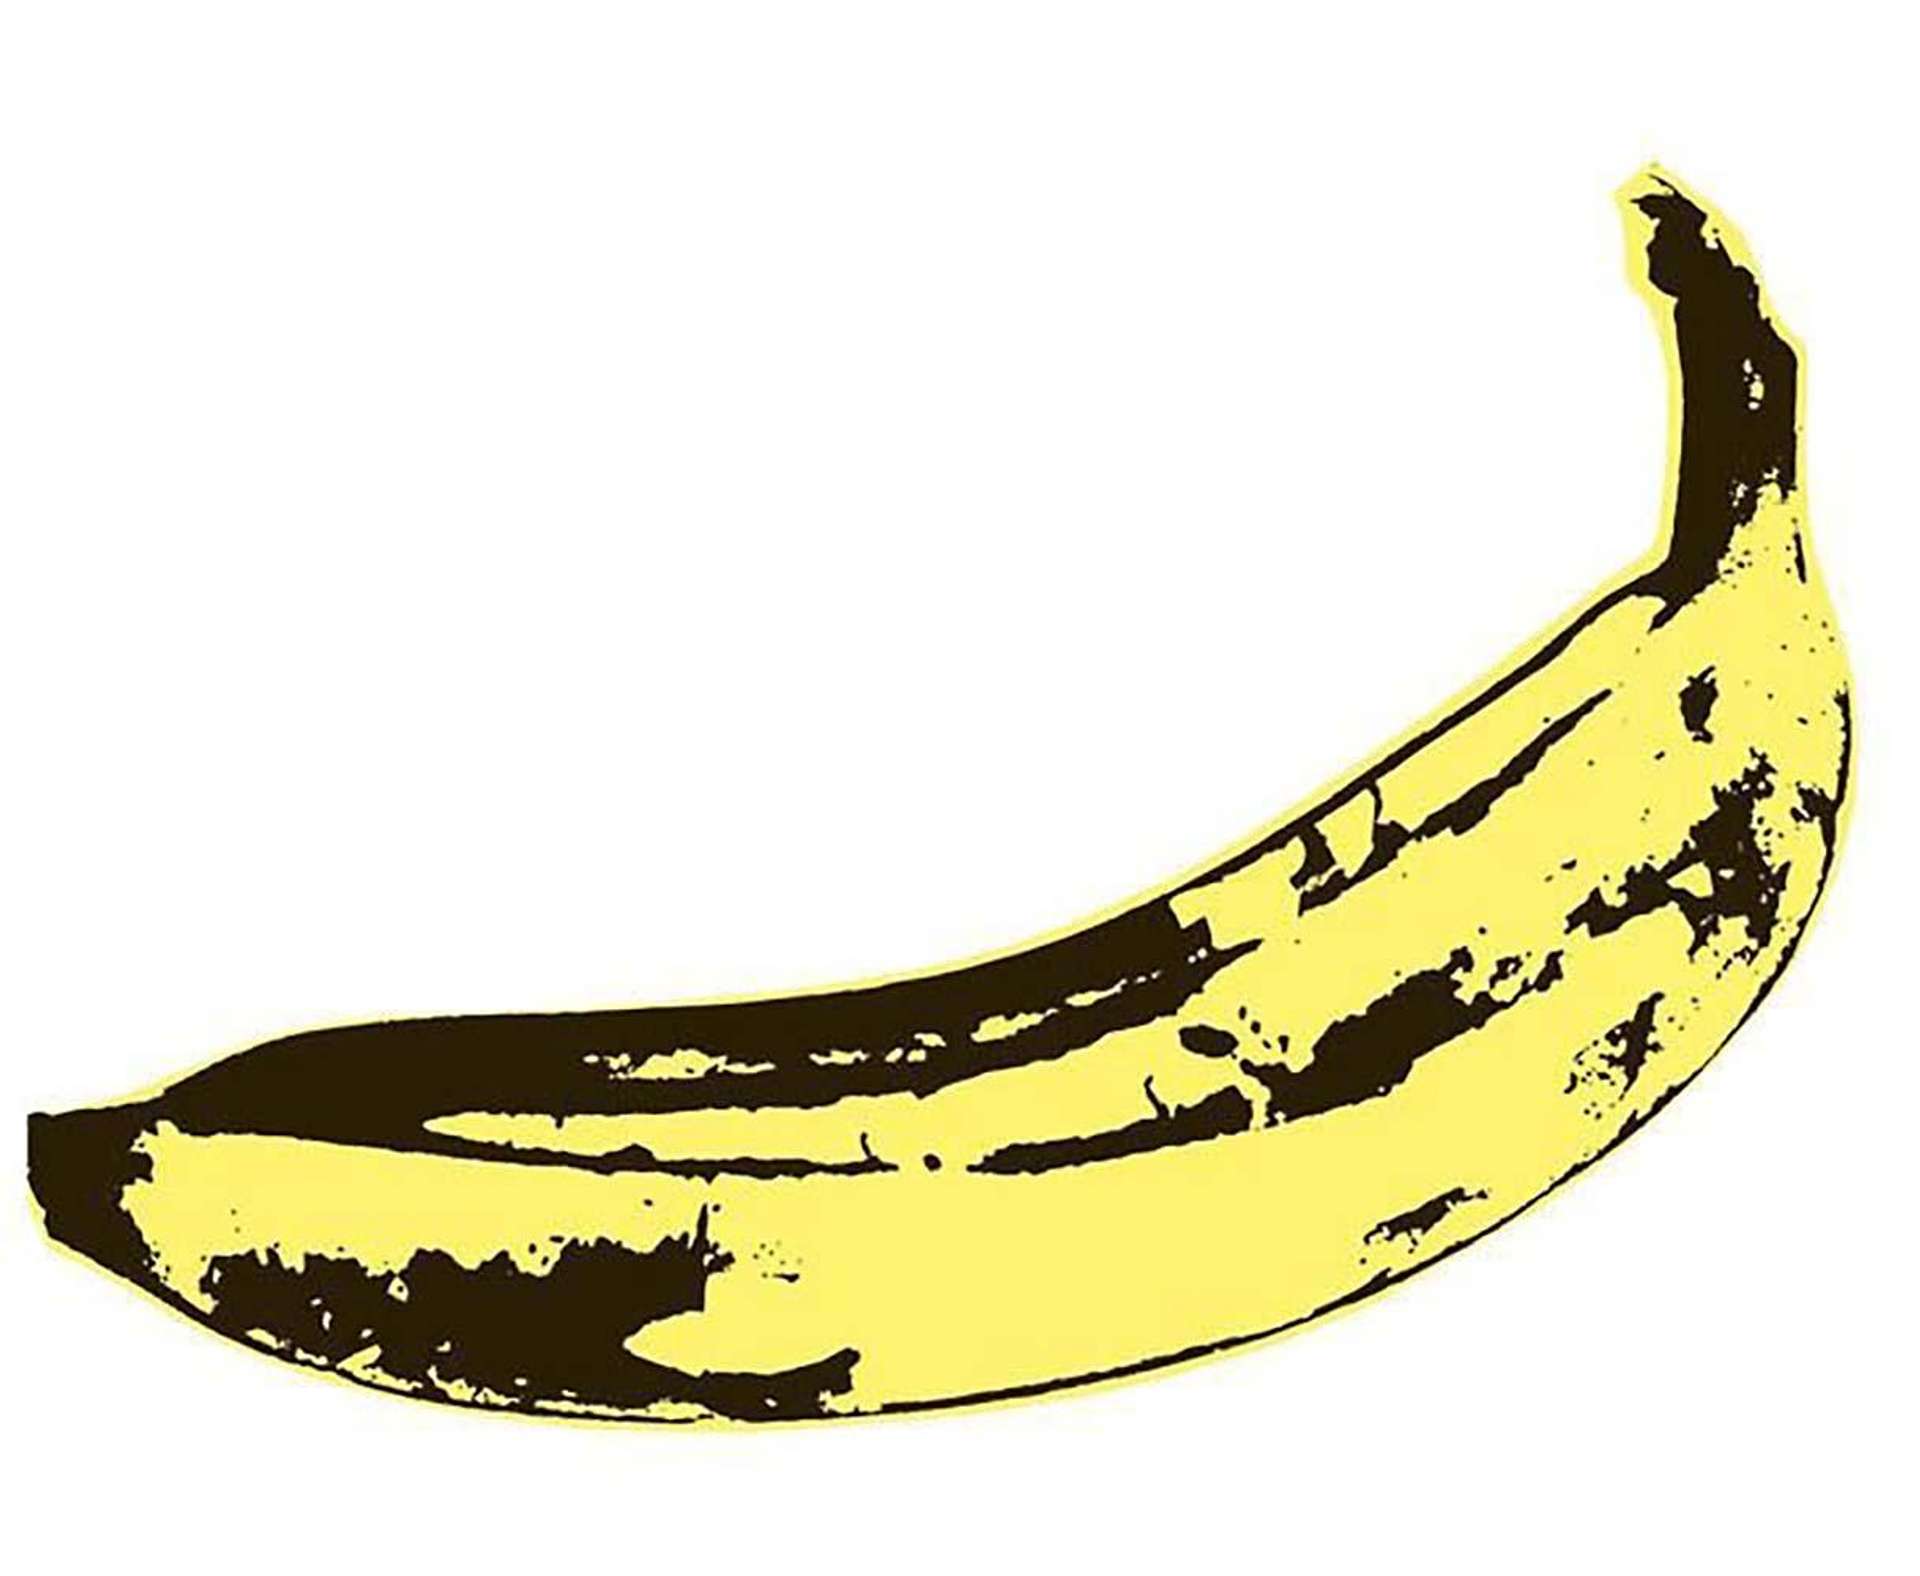 Andy Warhol: Banana (F. & S. II.10) - Signed Print